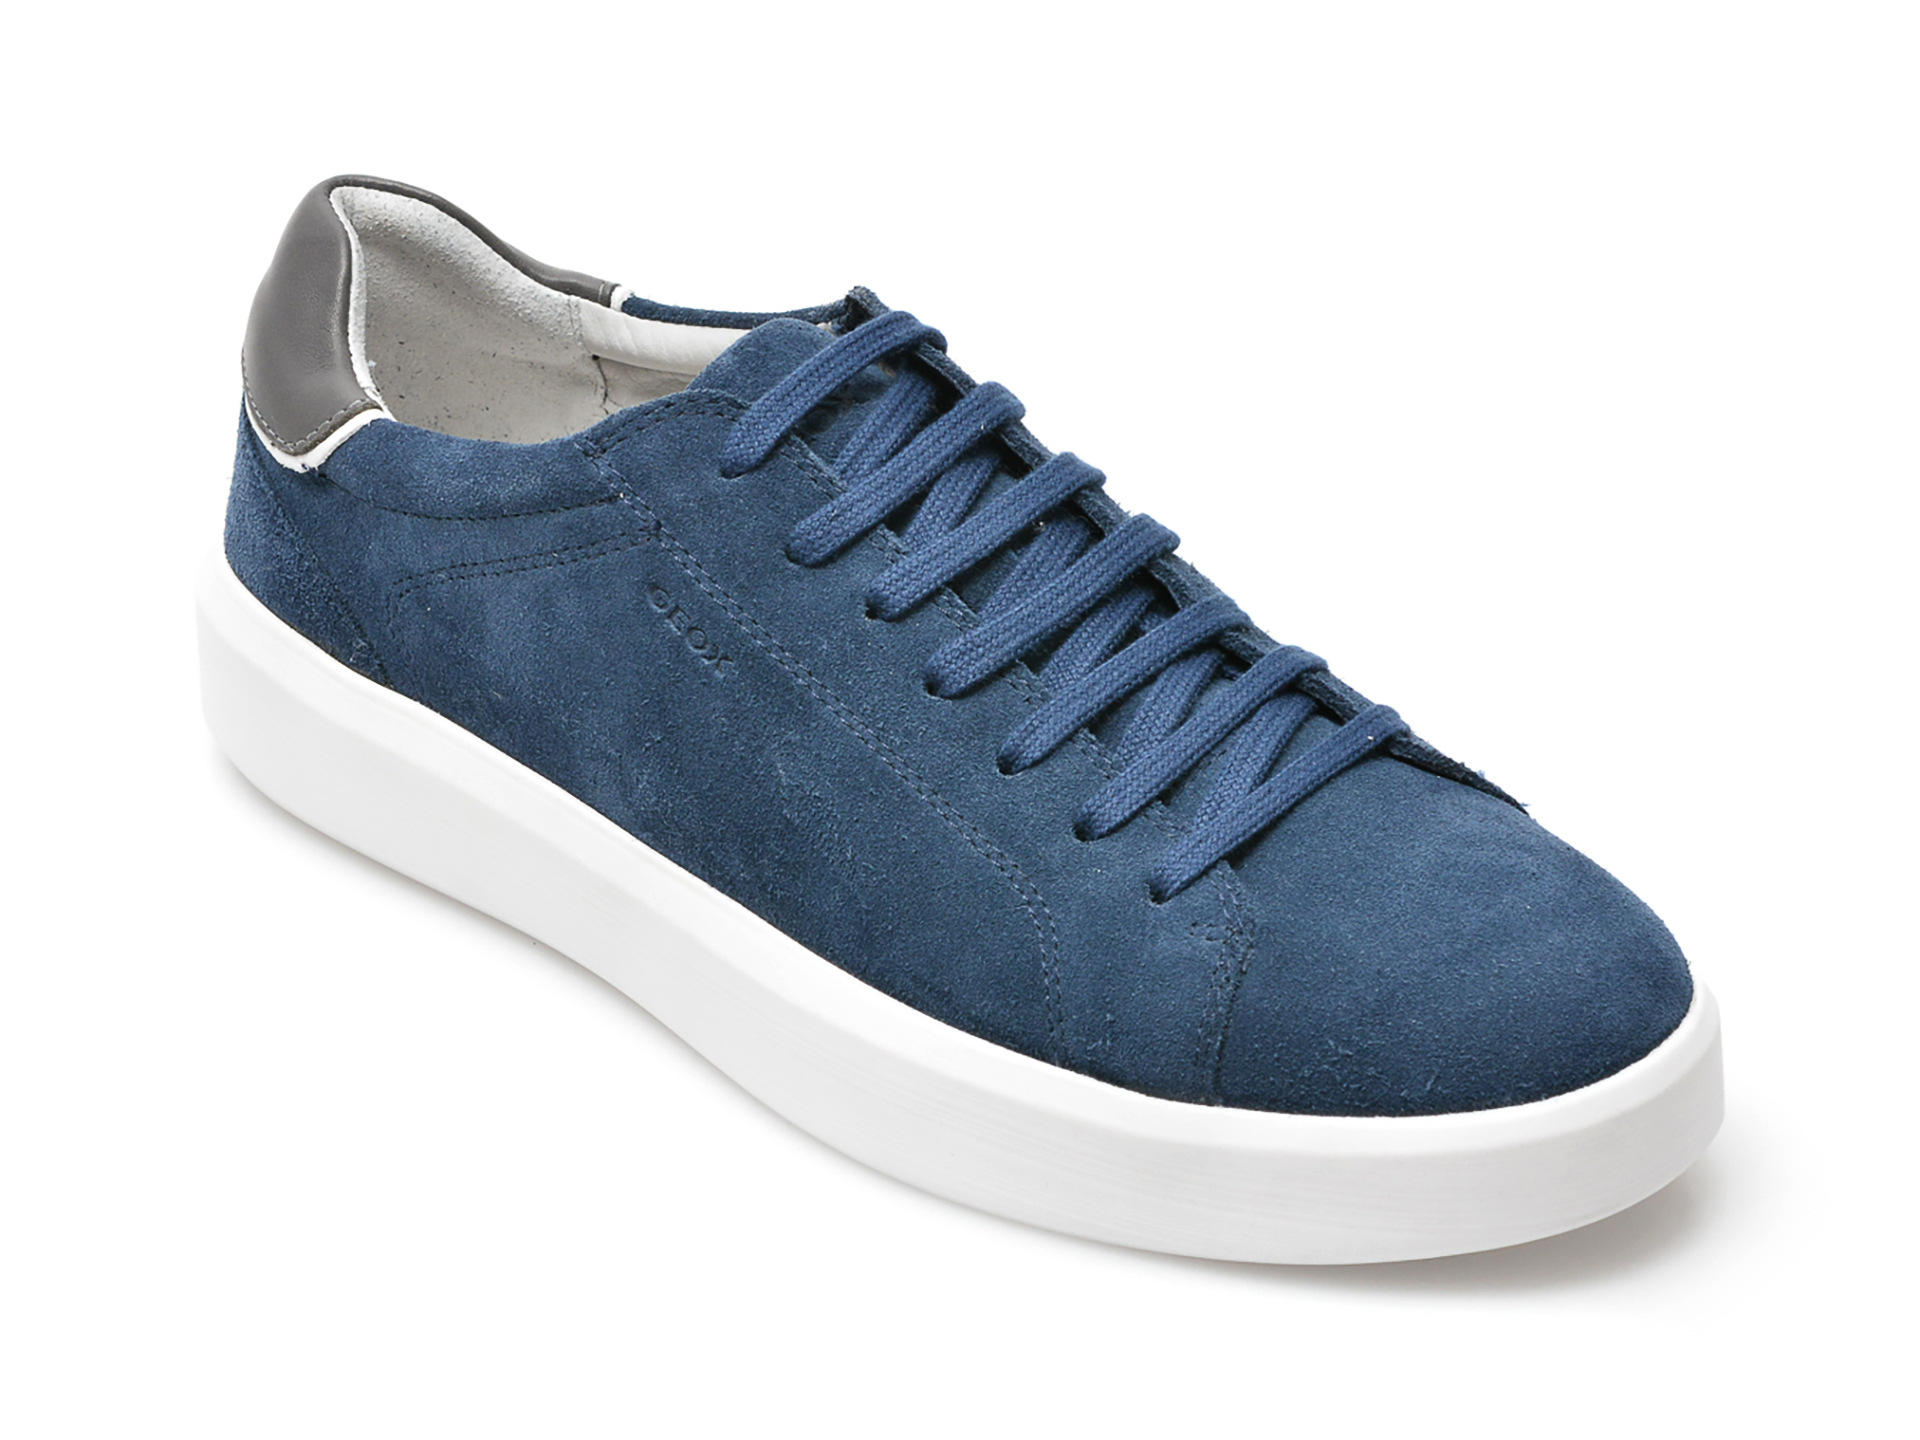 Pantofi GEOX albastri, U25EAE, din piele intoarsa Geox